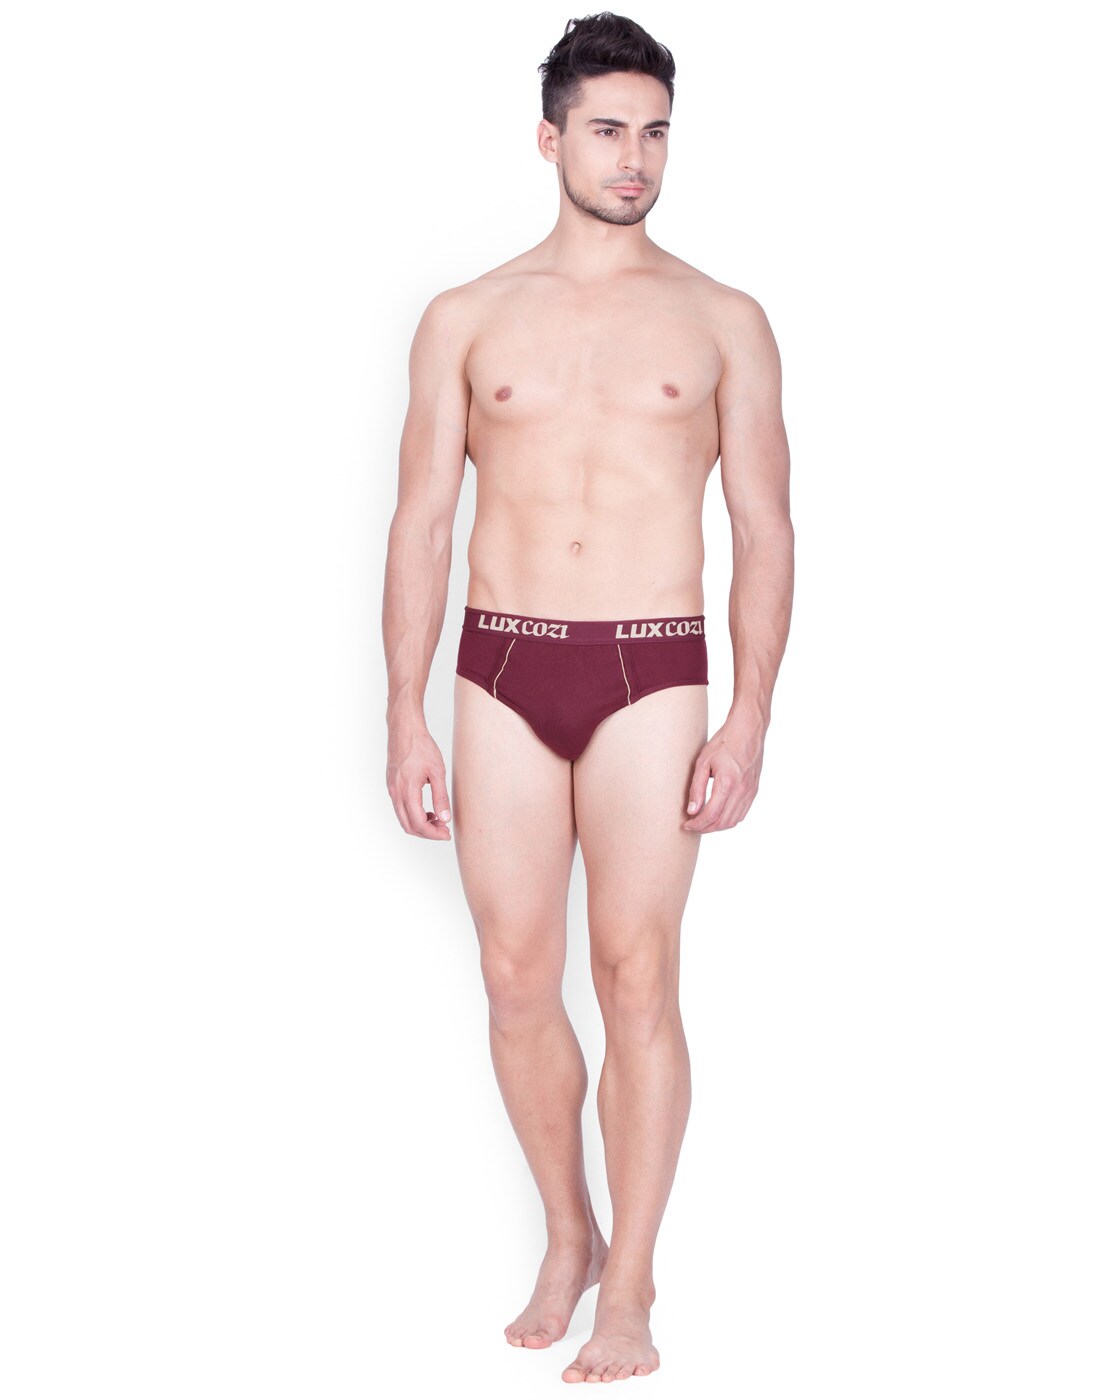 Lux Cozi Mens Underwear - Buy Lux Cozi Mens Underwear Online at Best Prices  on Snapdeal